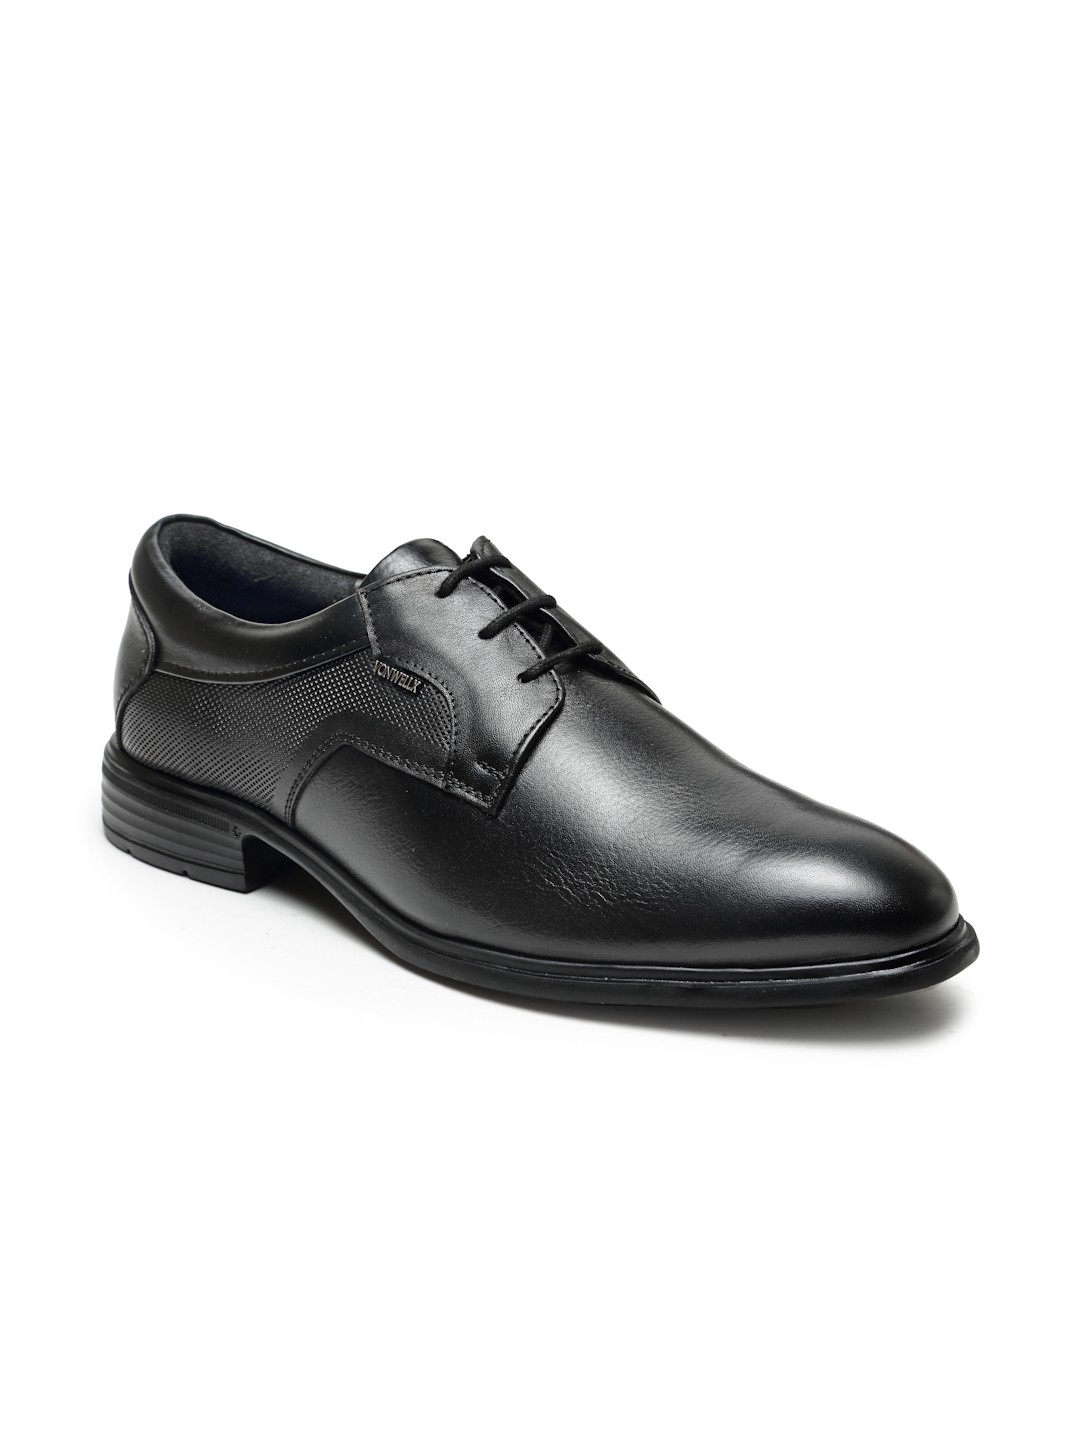 Buy Von Wellx Germany Comfort Men's Black Formal Shoes Adler Online in Lucknow